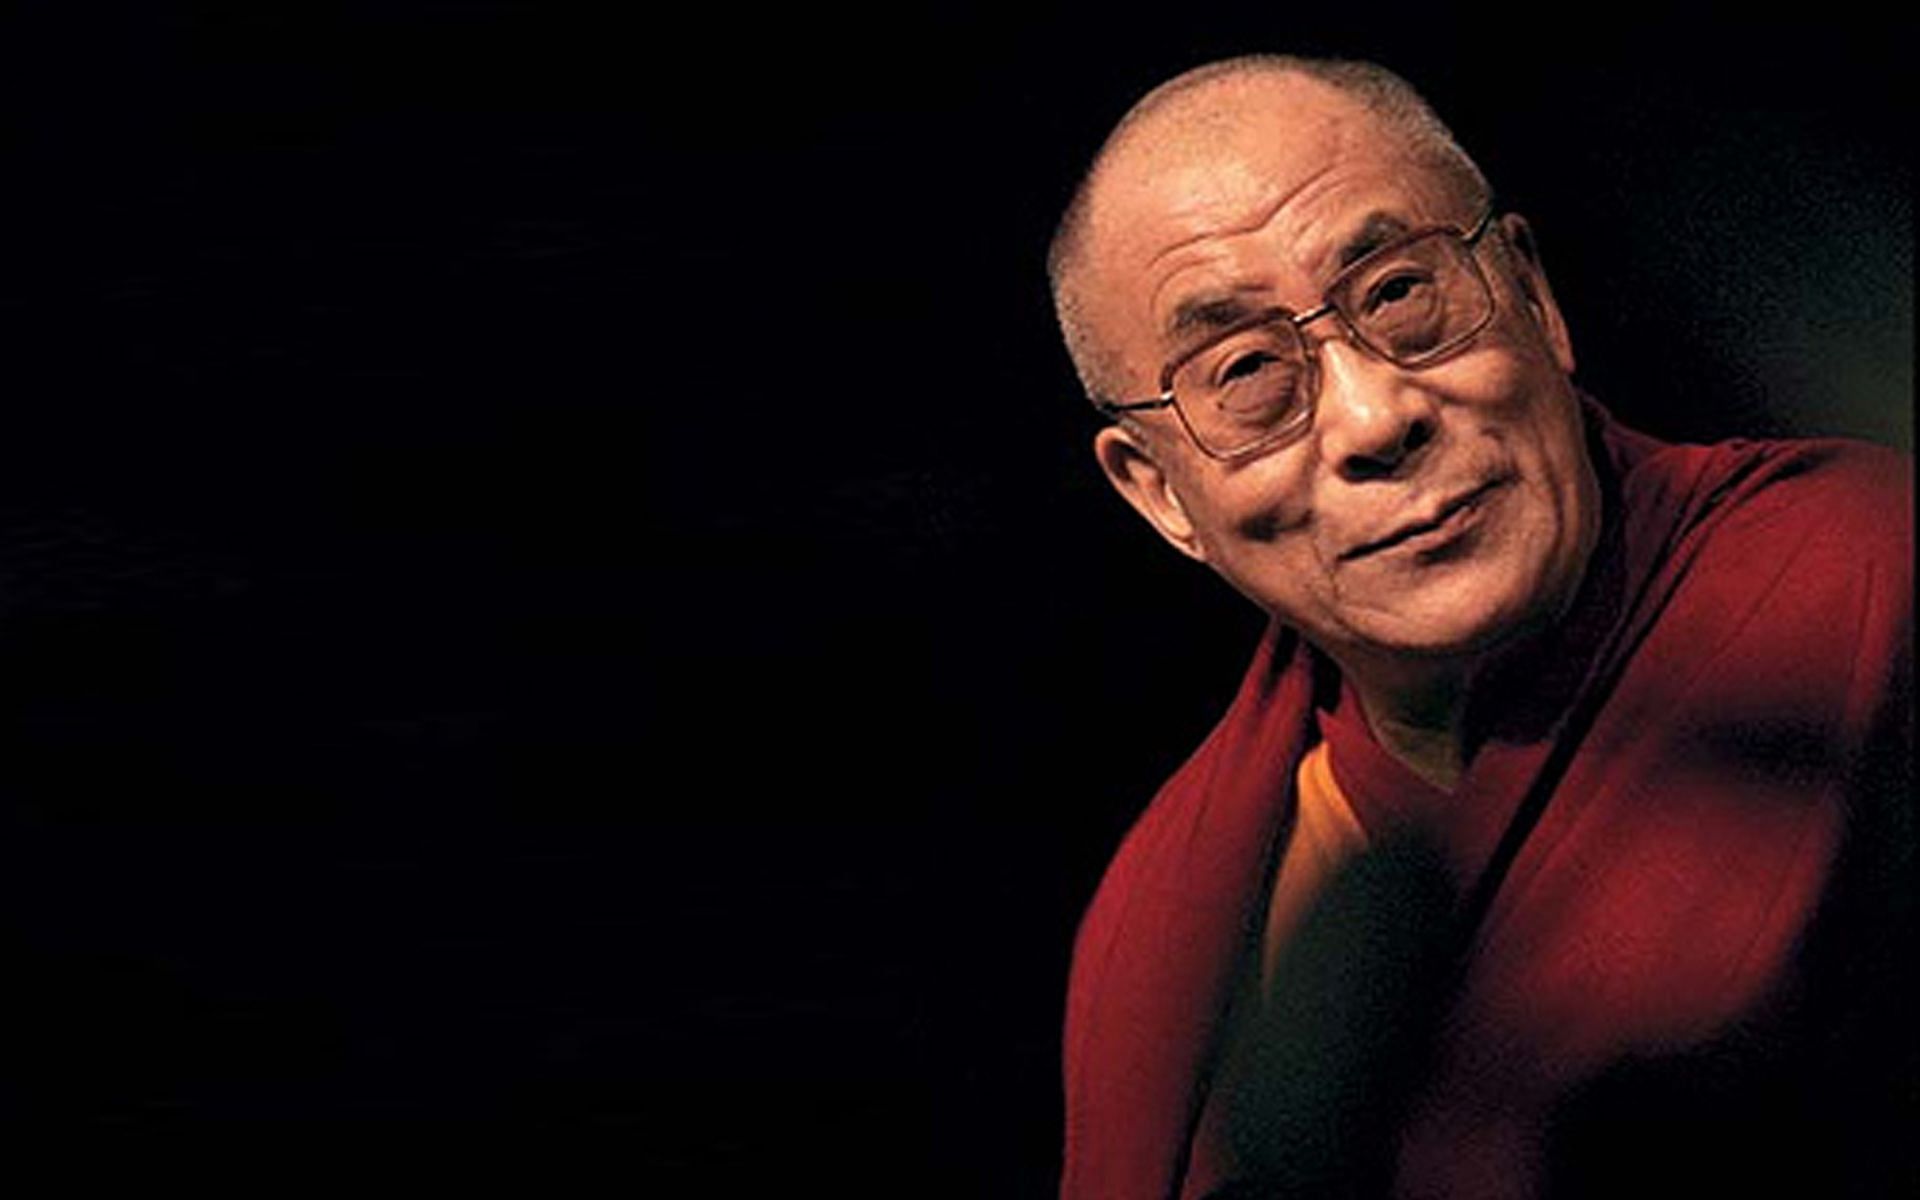 Spiritual leader Dalai Lama thanked his followers on his 88th birthday on Threads (Image via Wallpaper Access)